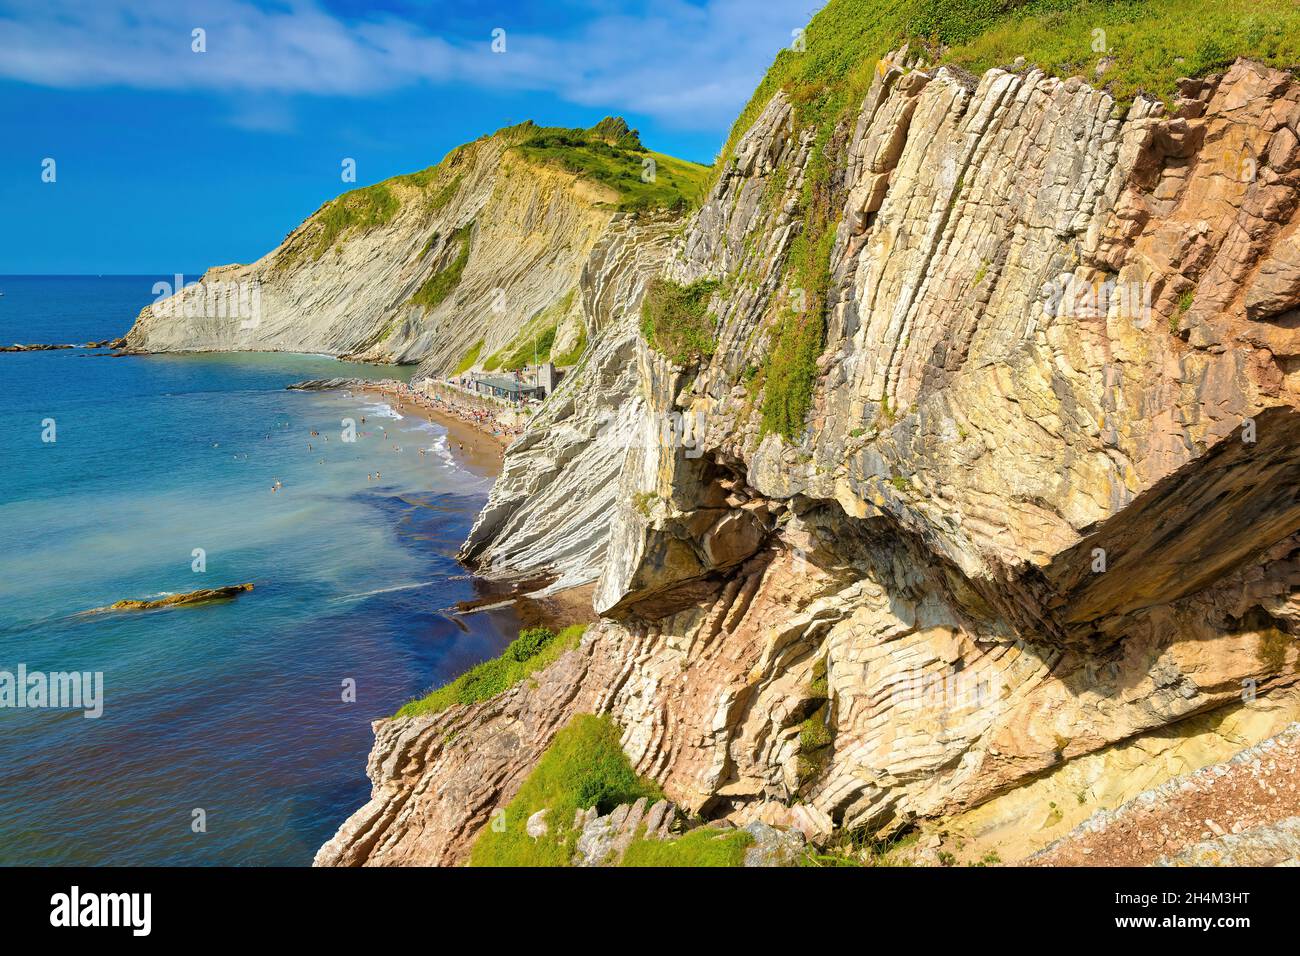 View of the cliff of Izurrun beach with its geological limestone rocks forming layers. Zumaya, Euskadi, Spain Stock Photo